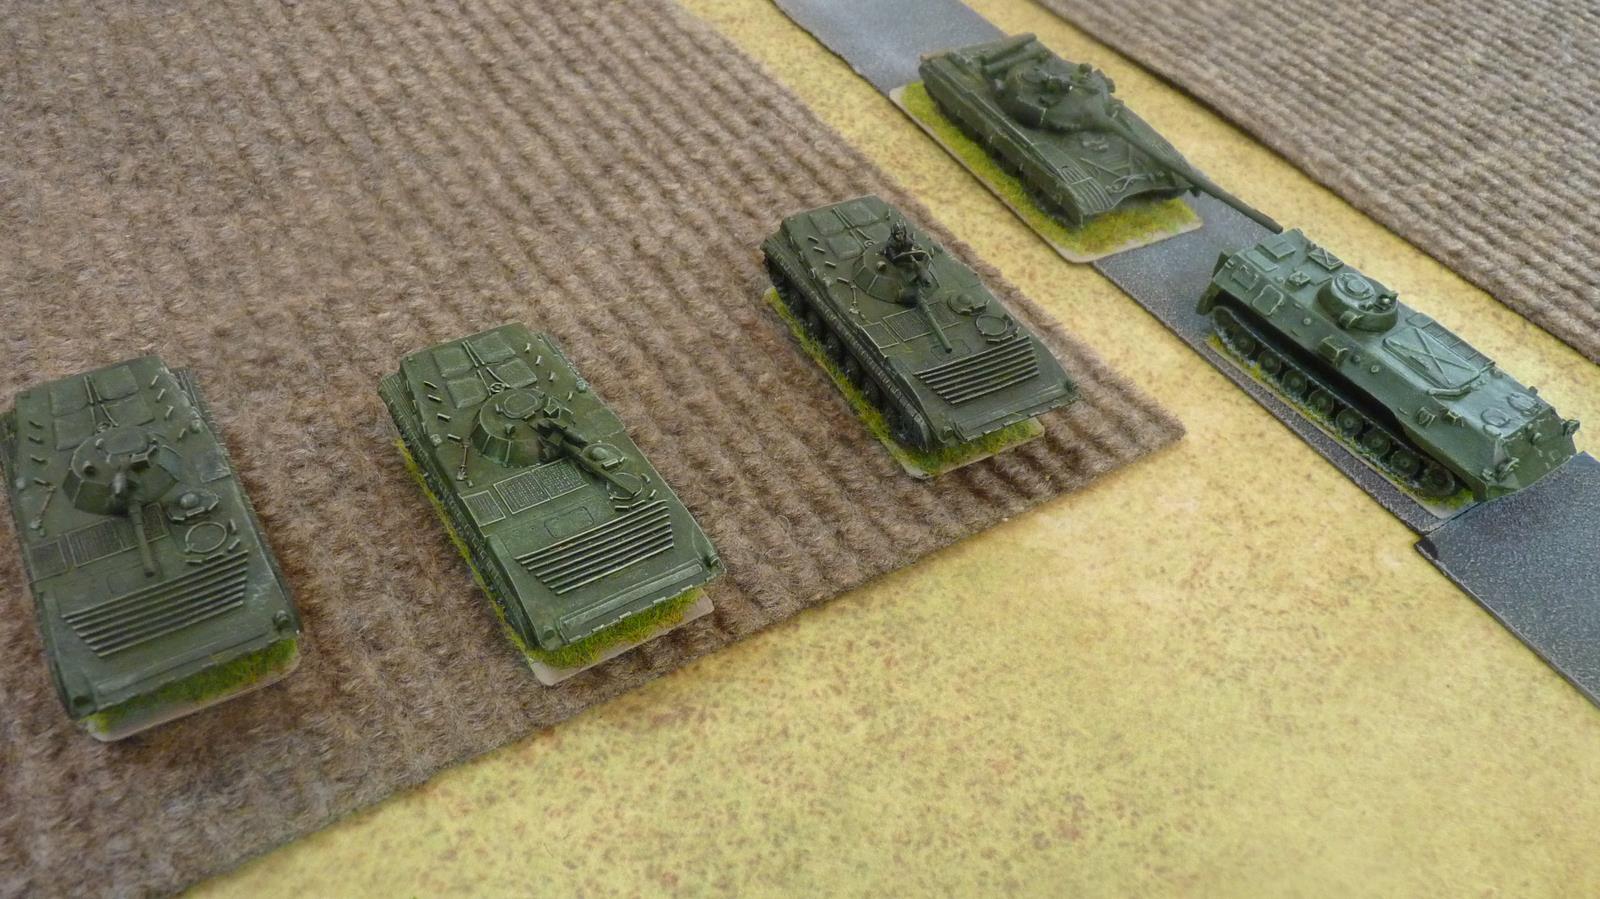 Soviet BMPs and an ACRV2 advance